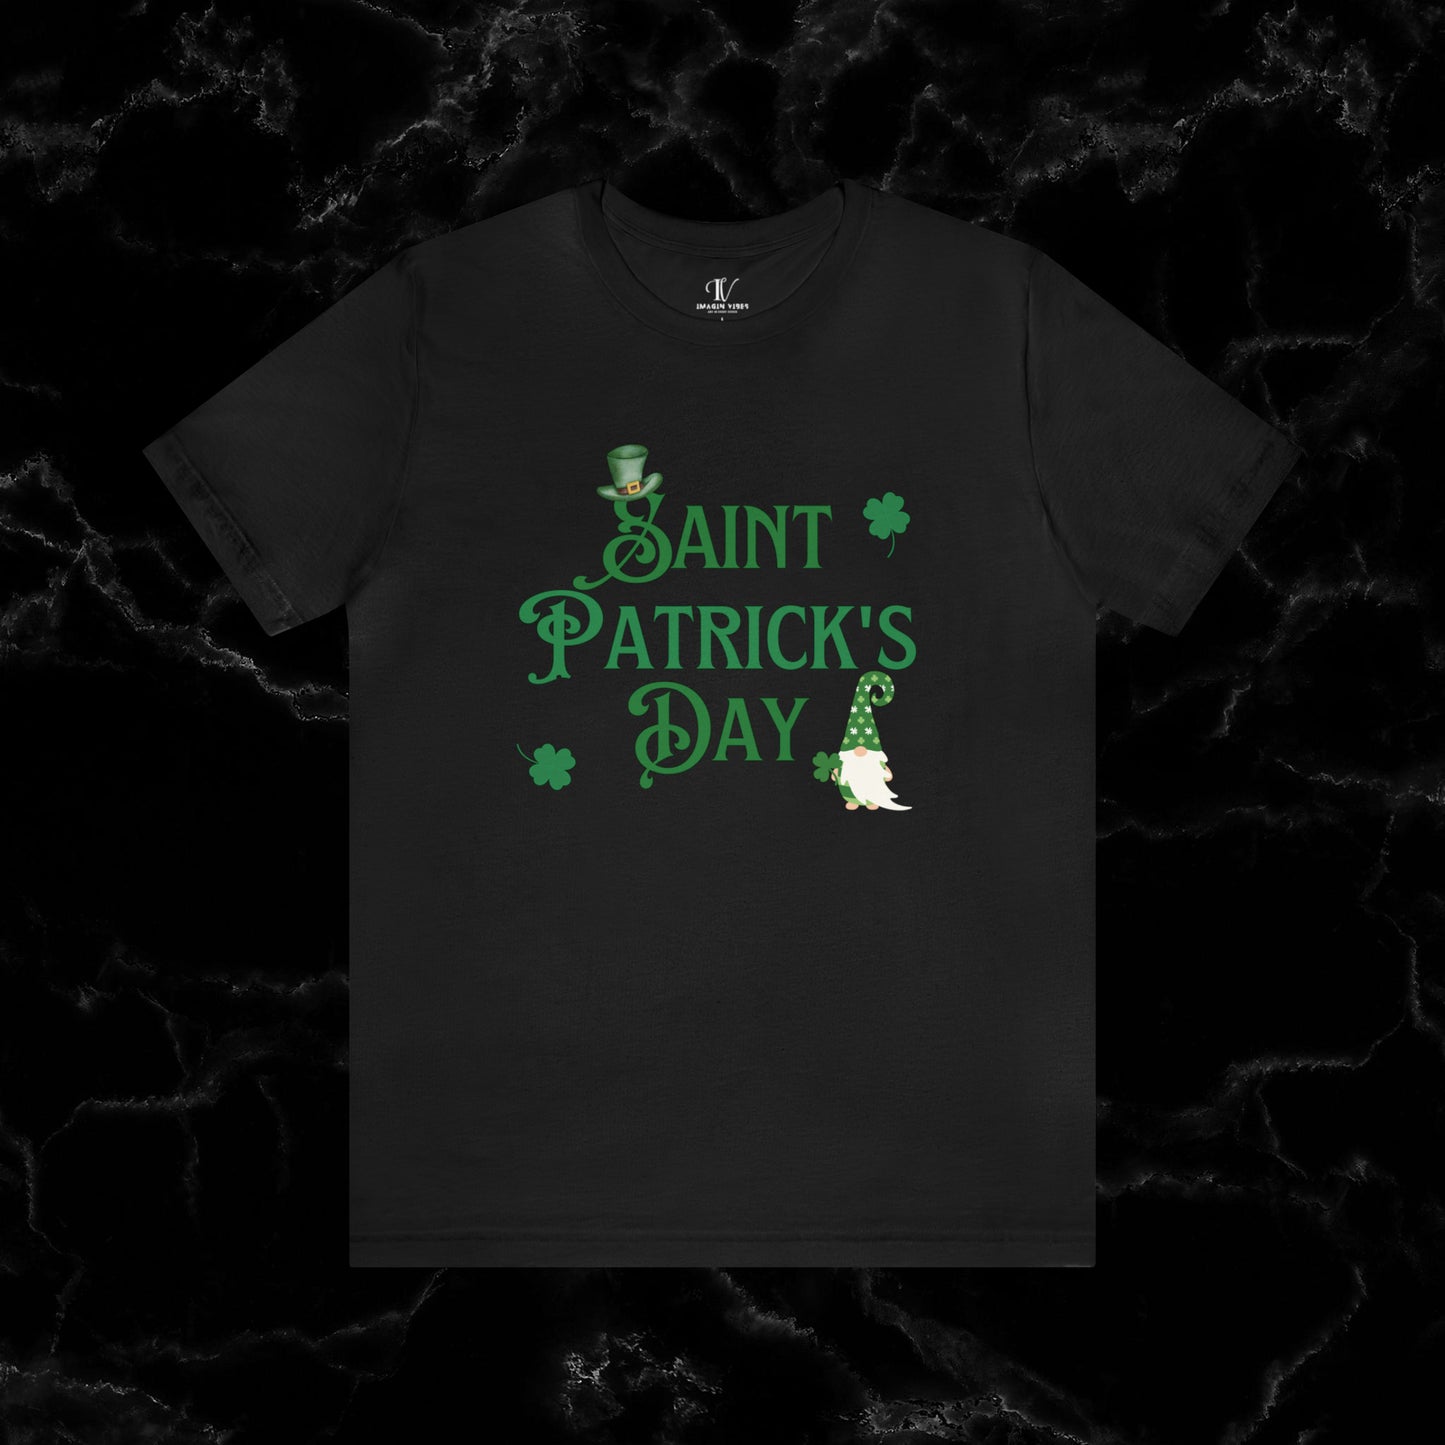 Saint Patrick's Day Shirt - St. Paddy's Day Lucky Irish Shamrock Leaf Clover Flag Beer T-Shirt T-Shirt Black XS 